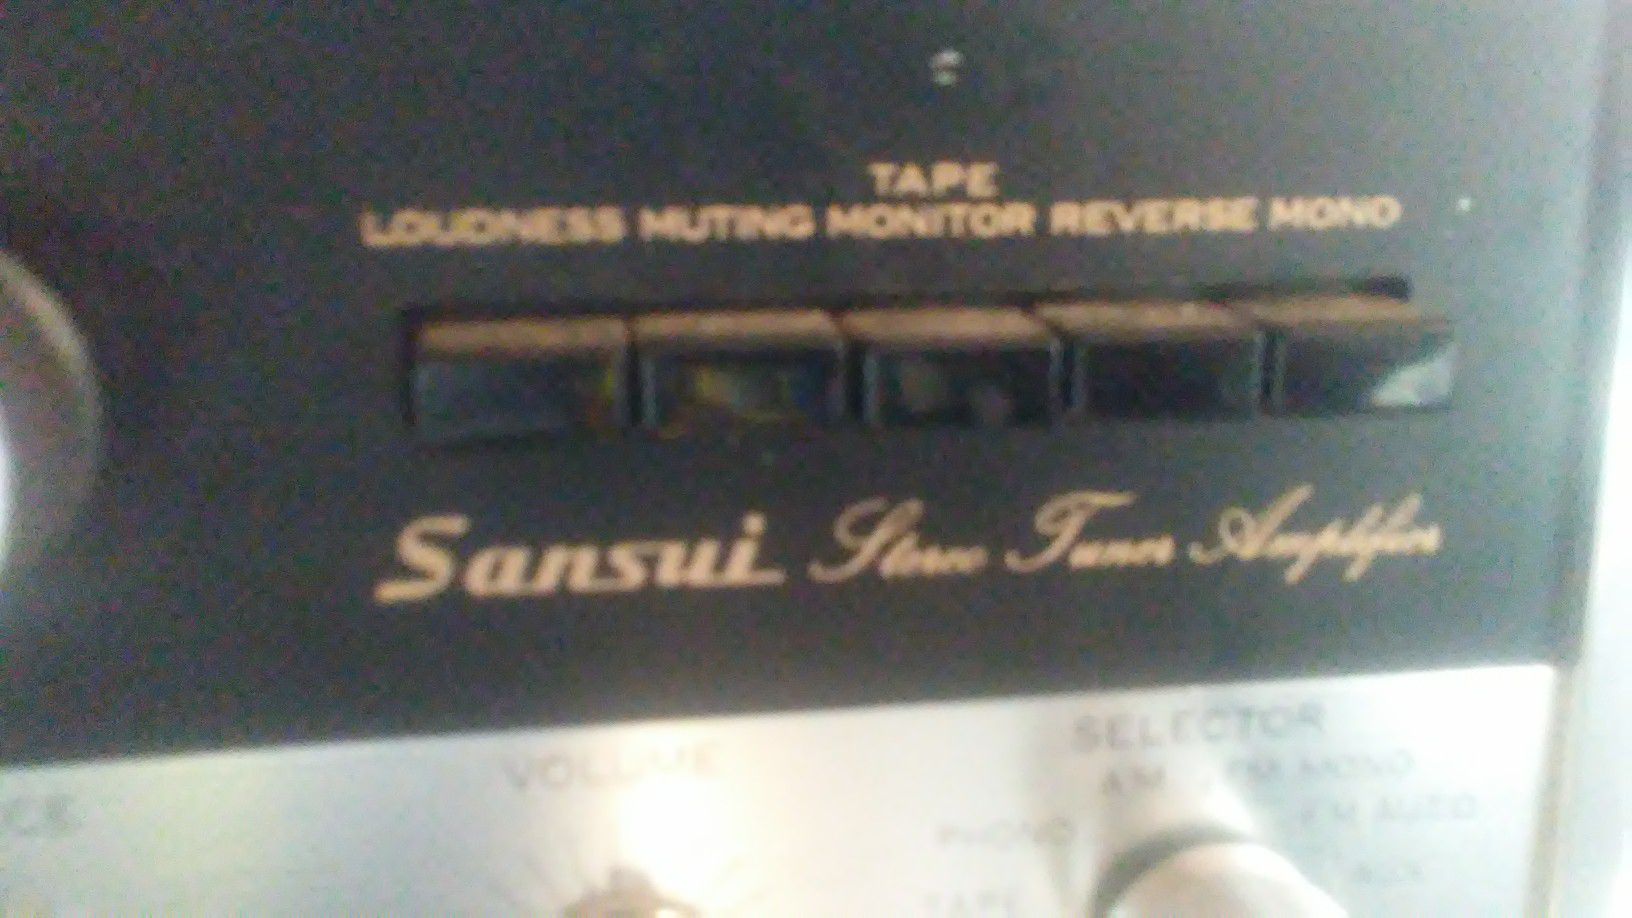 Sansui model 2000 amplifier